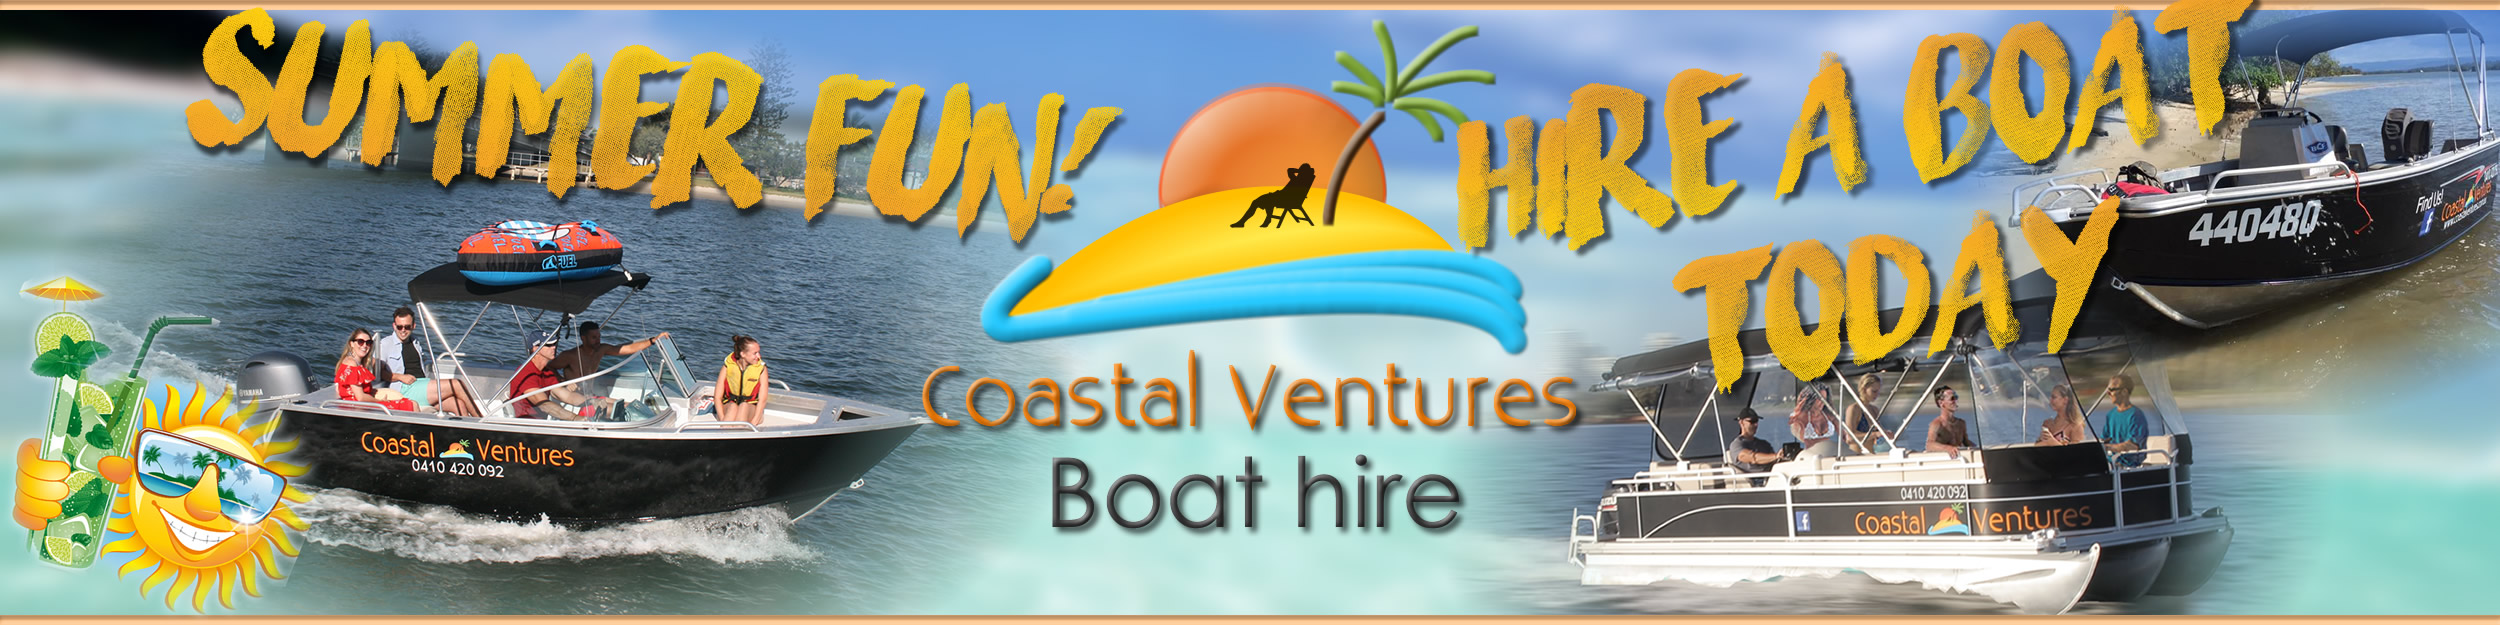 Coastal Ventures Boat Hire